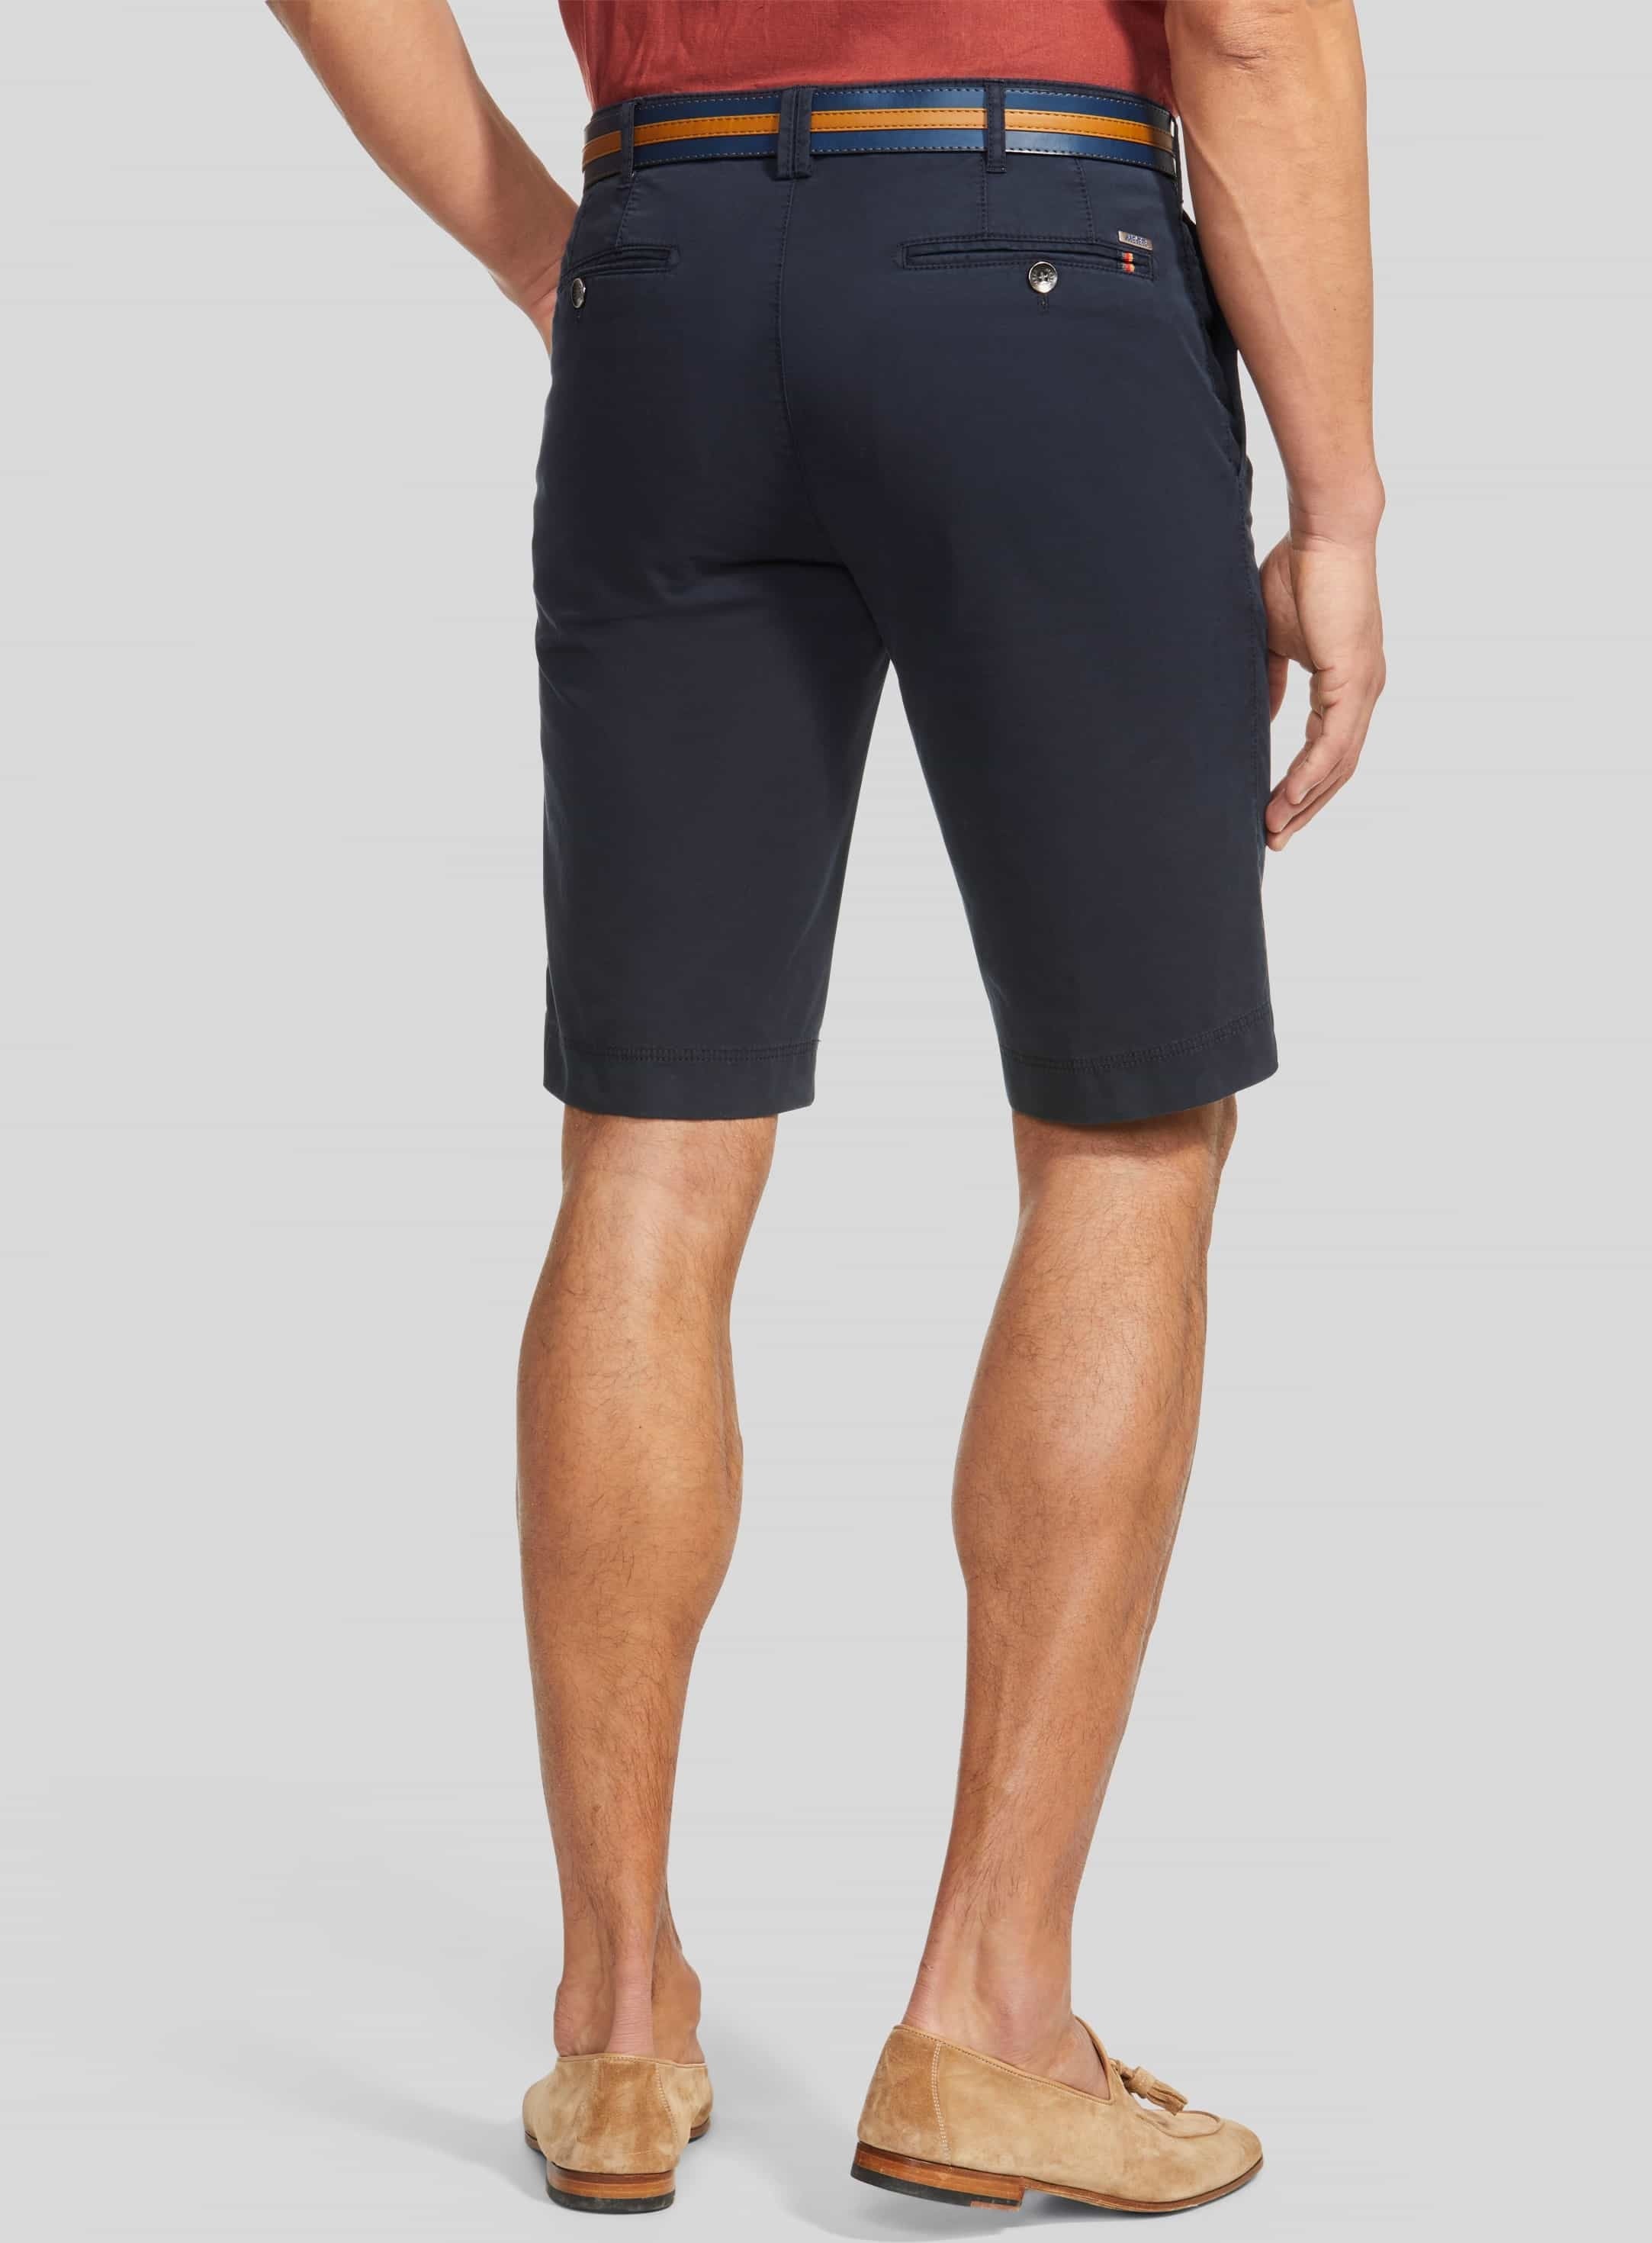 30% OFF - MEYER B-Palma Shorts - Men's Cotton Twill - Navy - Size: 38" Waist